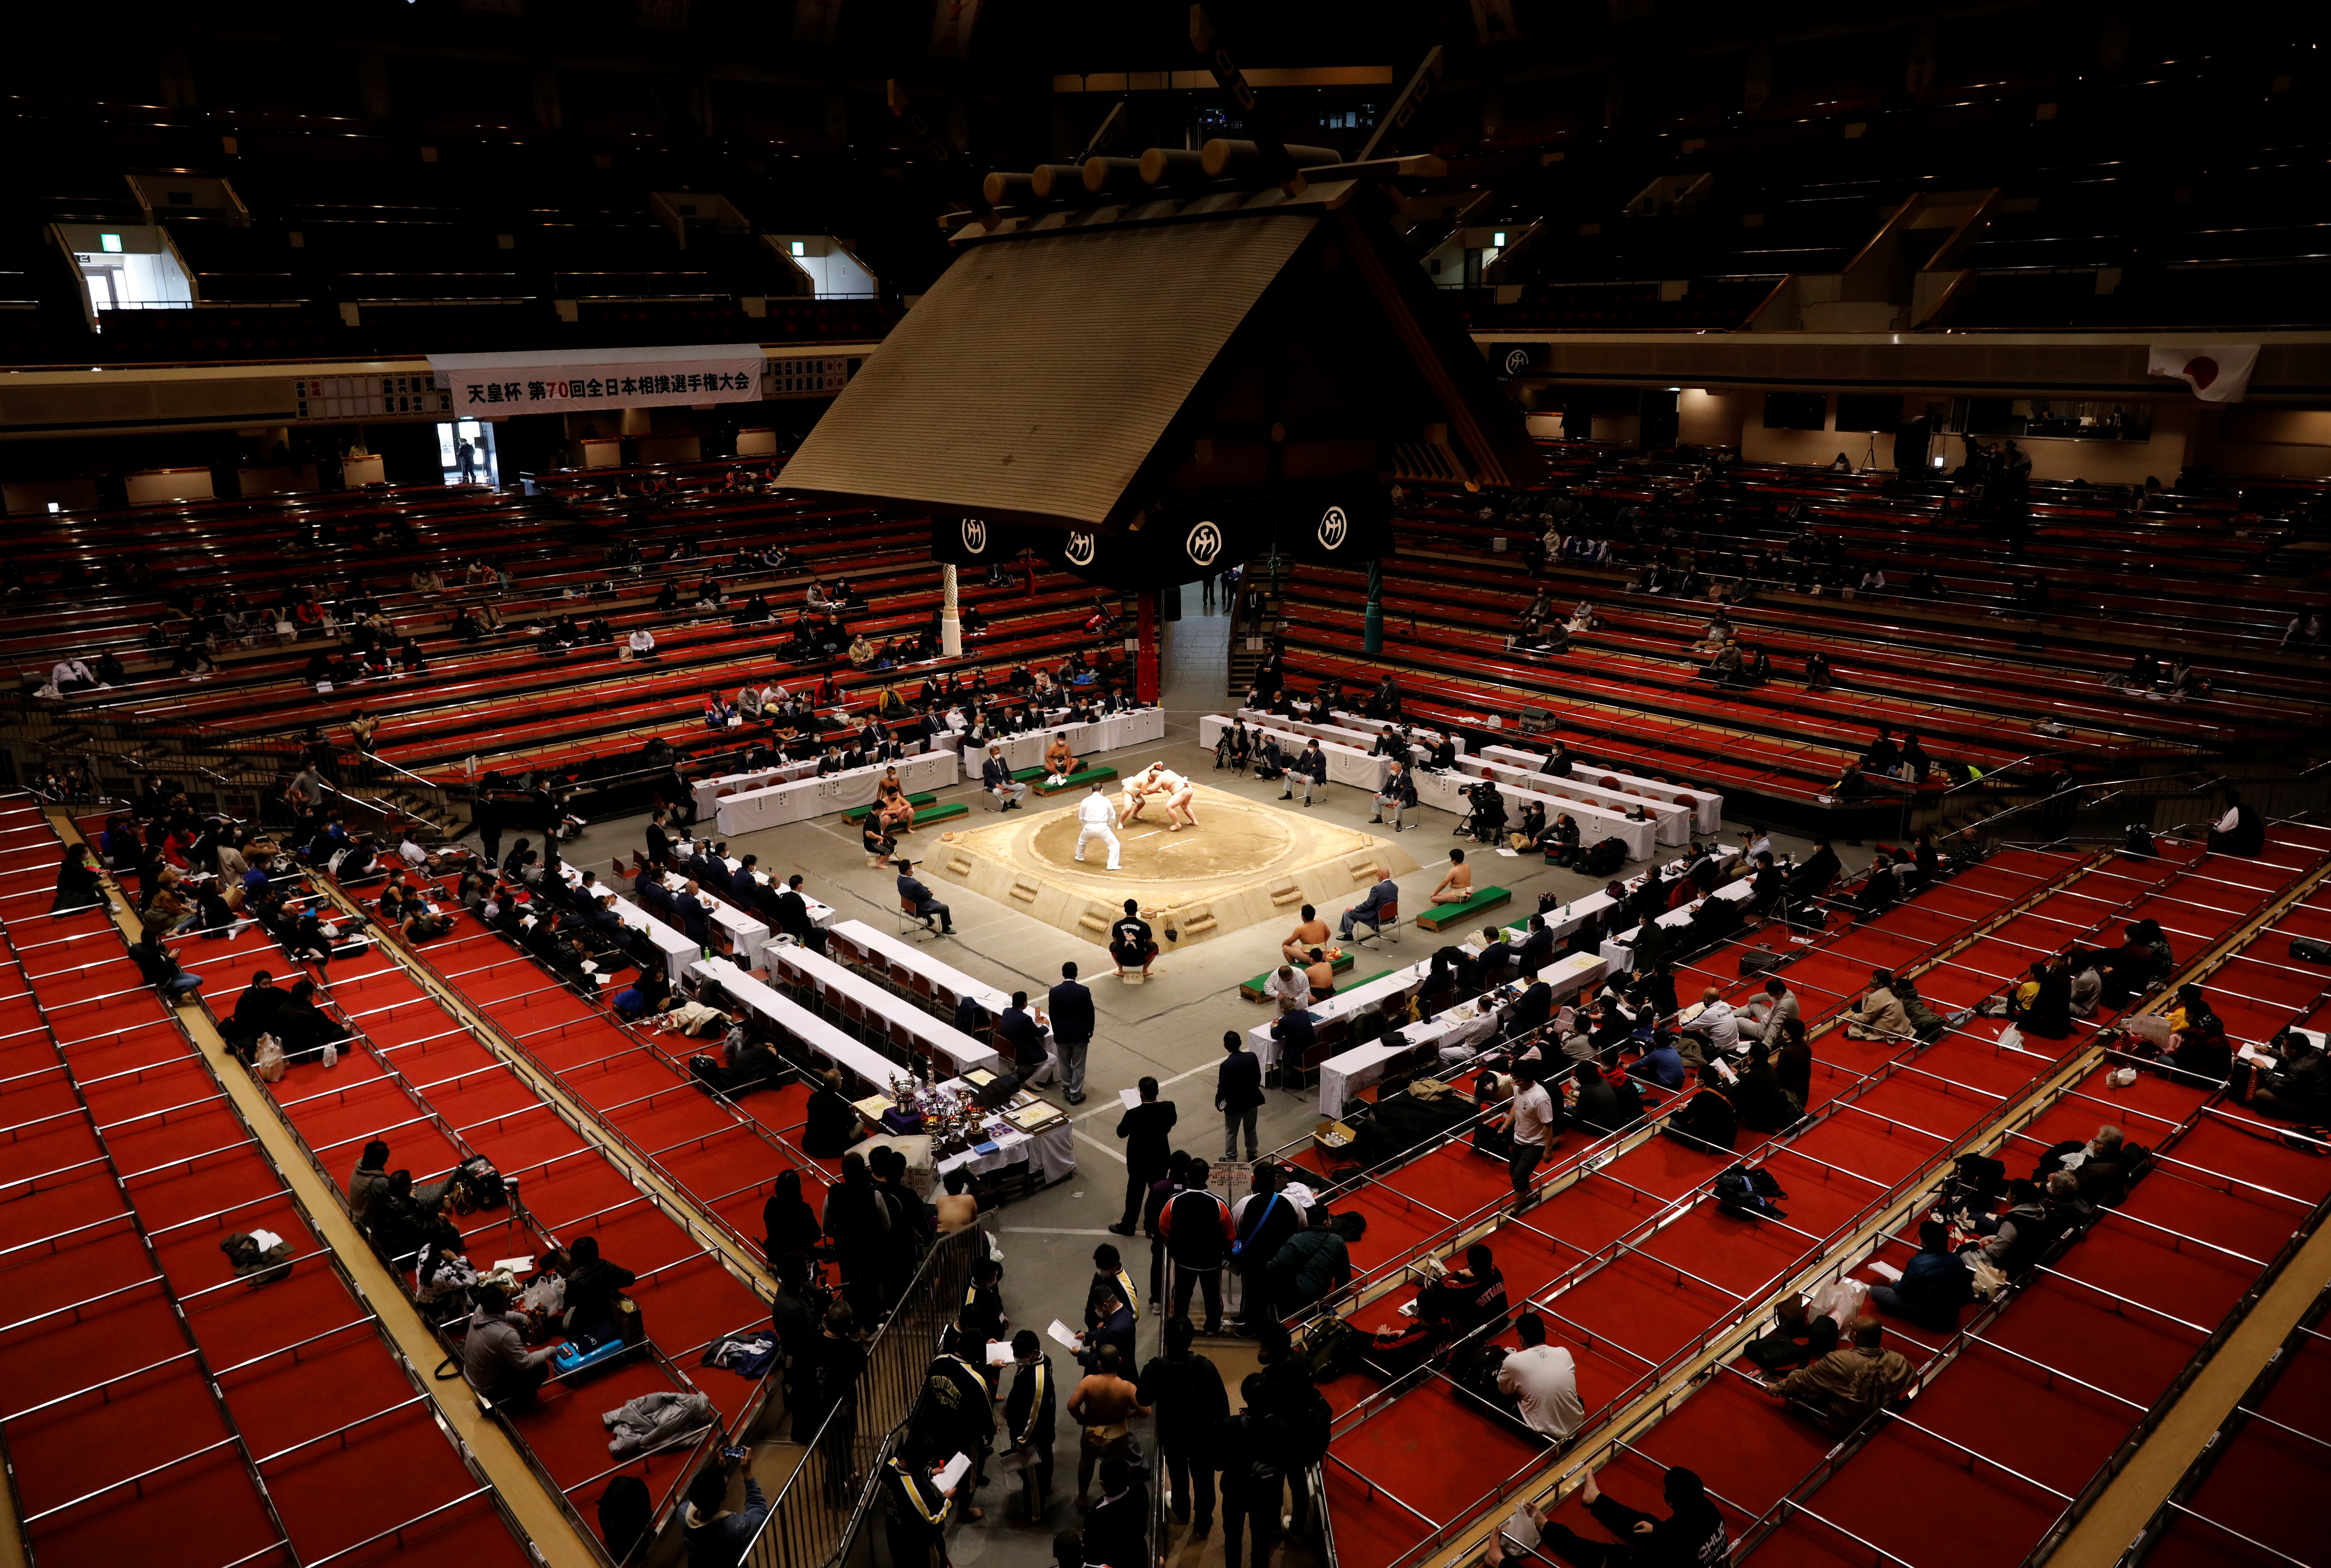 Elementary school sumo wrestler Kyuta Kumagai competes in a tournament of the All-Japan Elementary School Sumo Championship at Ryogoku Kokugikan National Sumo Stadium in Tokyo, Japan, December 5, 2021. REUTERS/Kim Kyung-Hoon